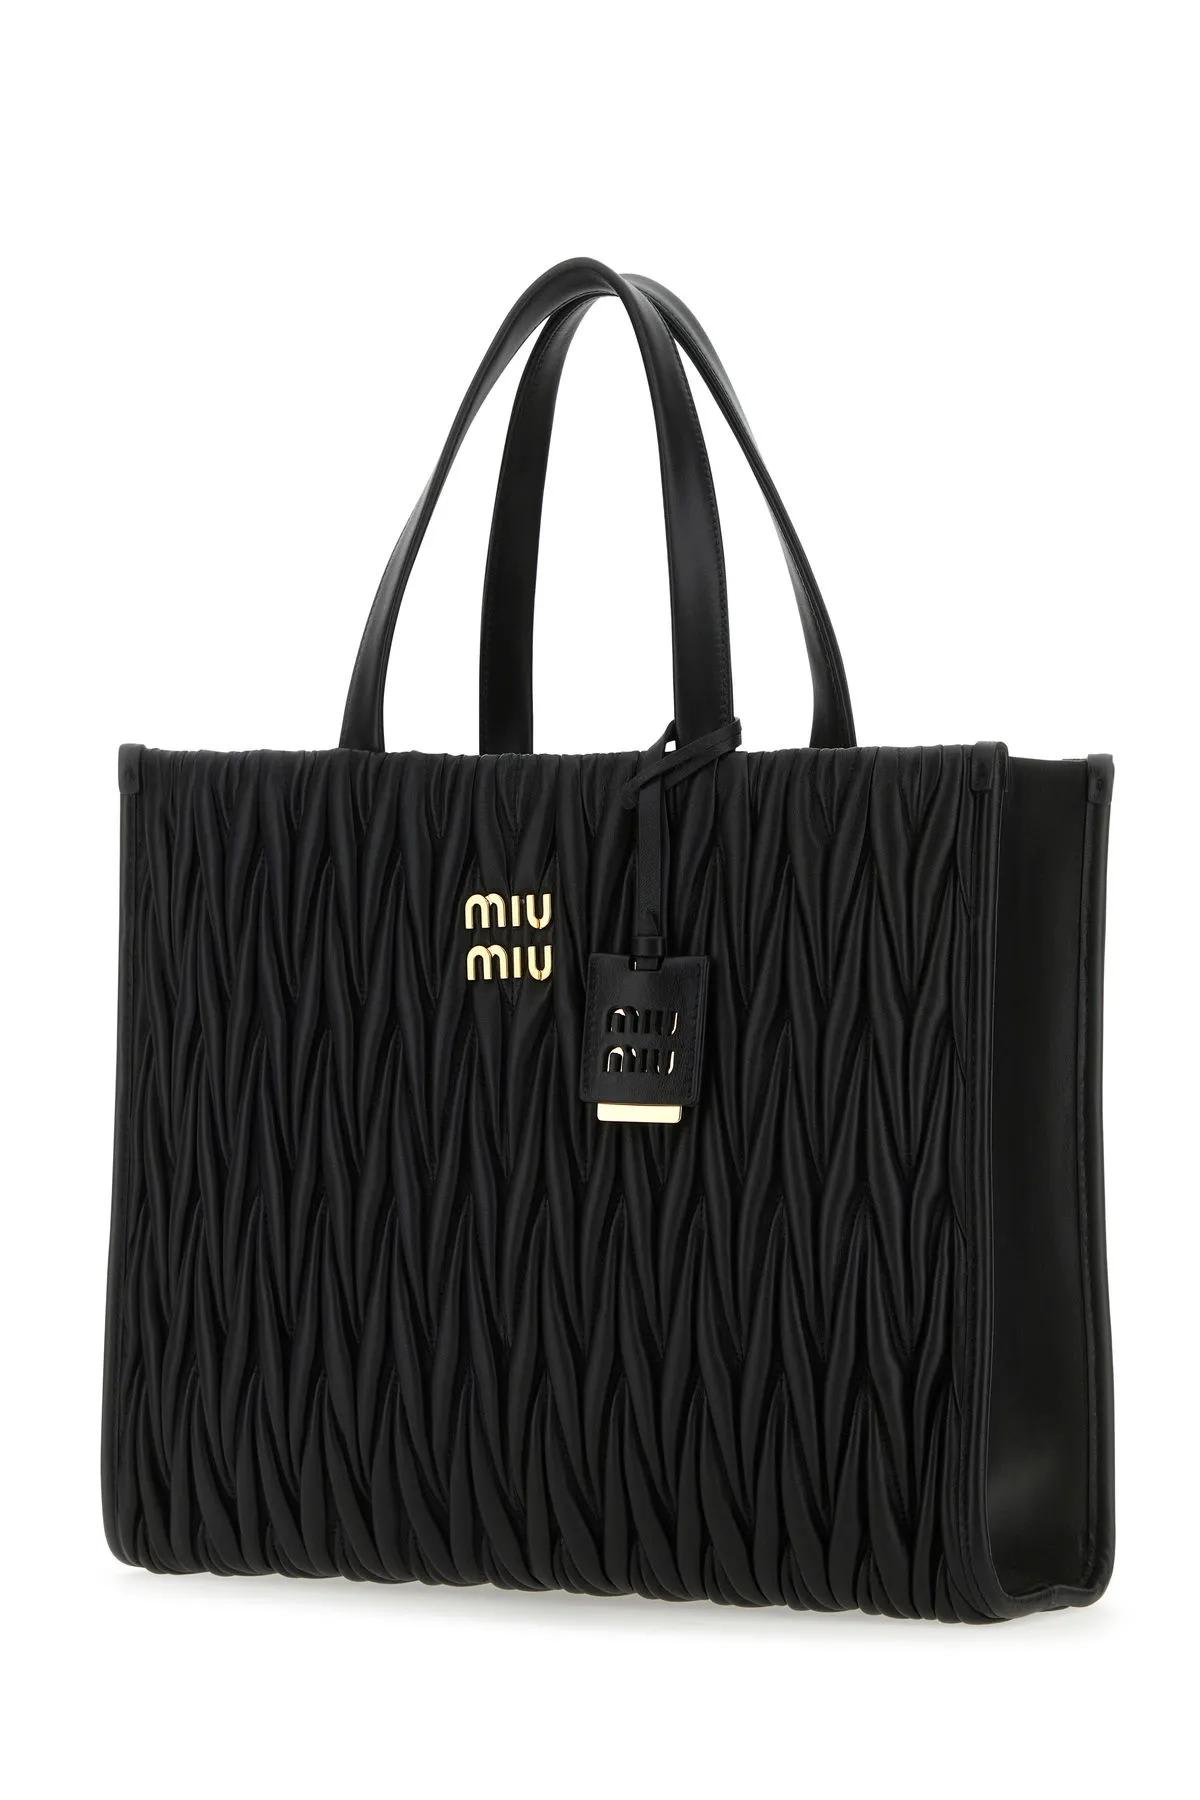 miumiu's Nappa leather pocket bag is quickly becoming a celeb favorit, Miu  Miu Bag